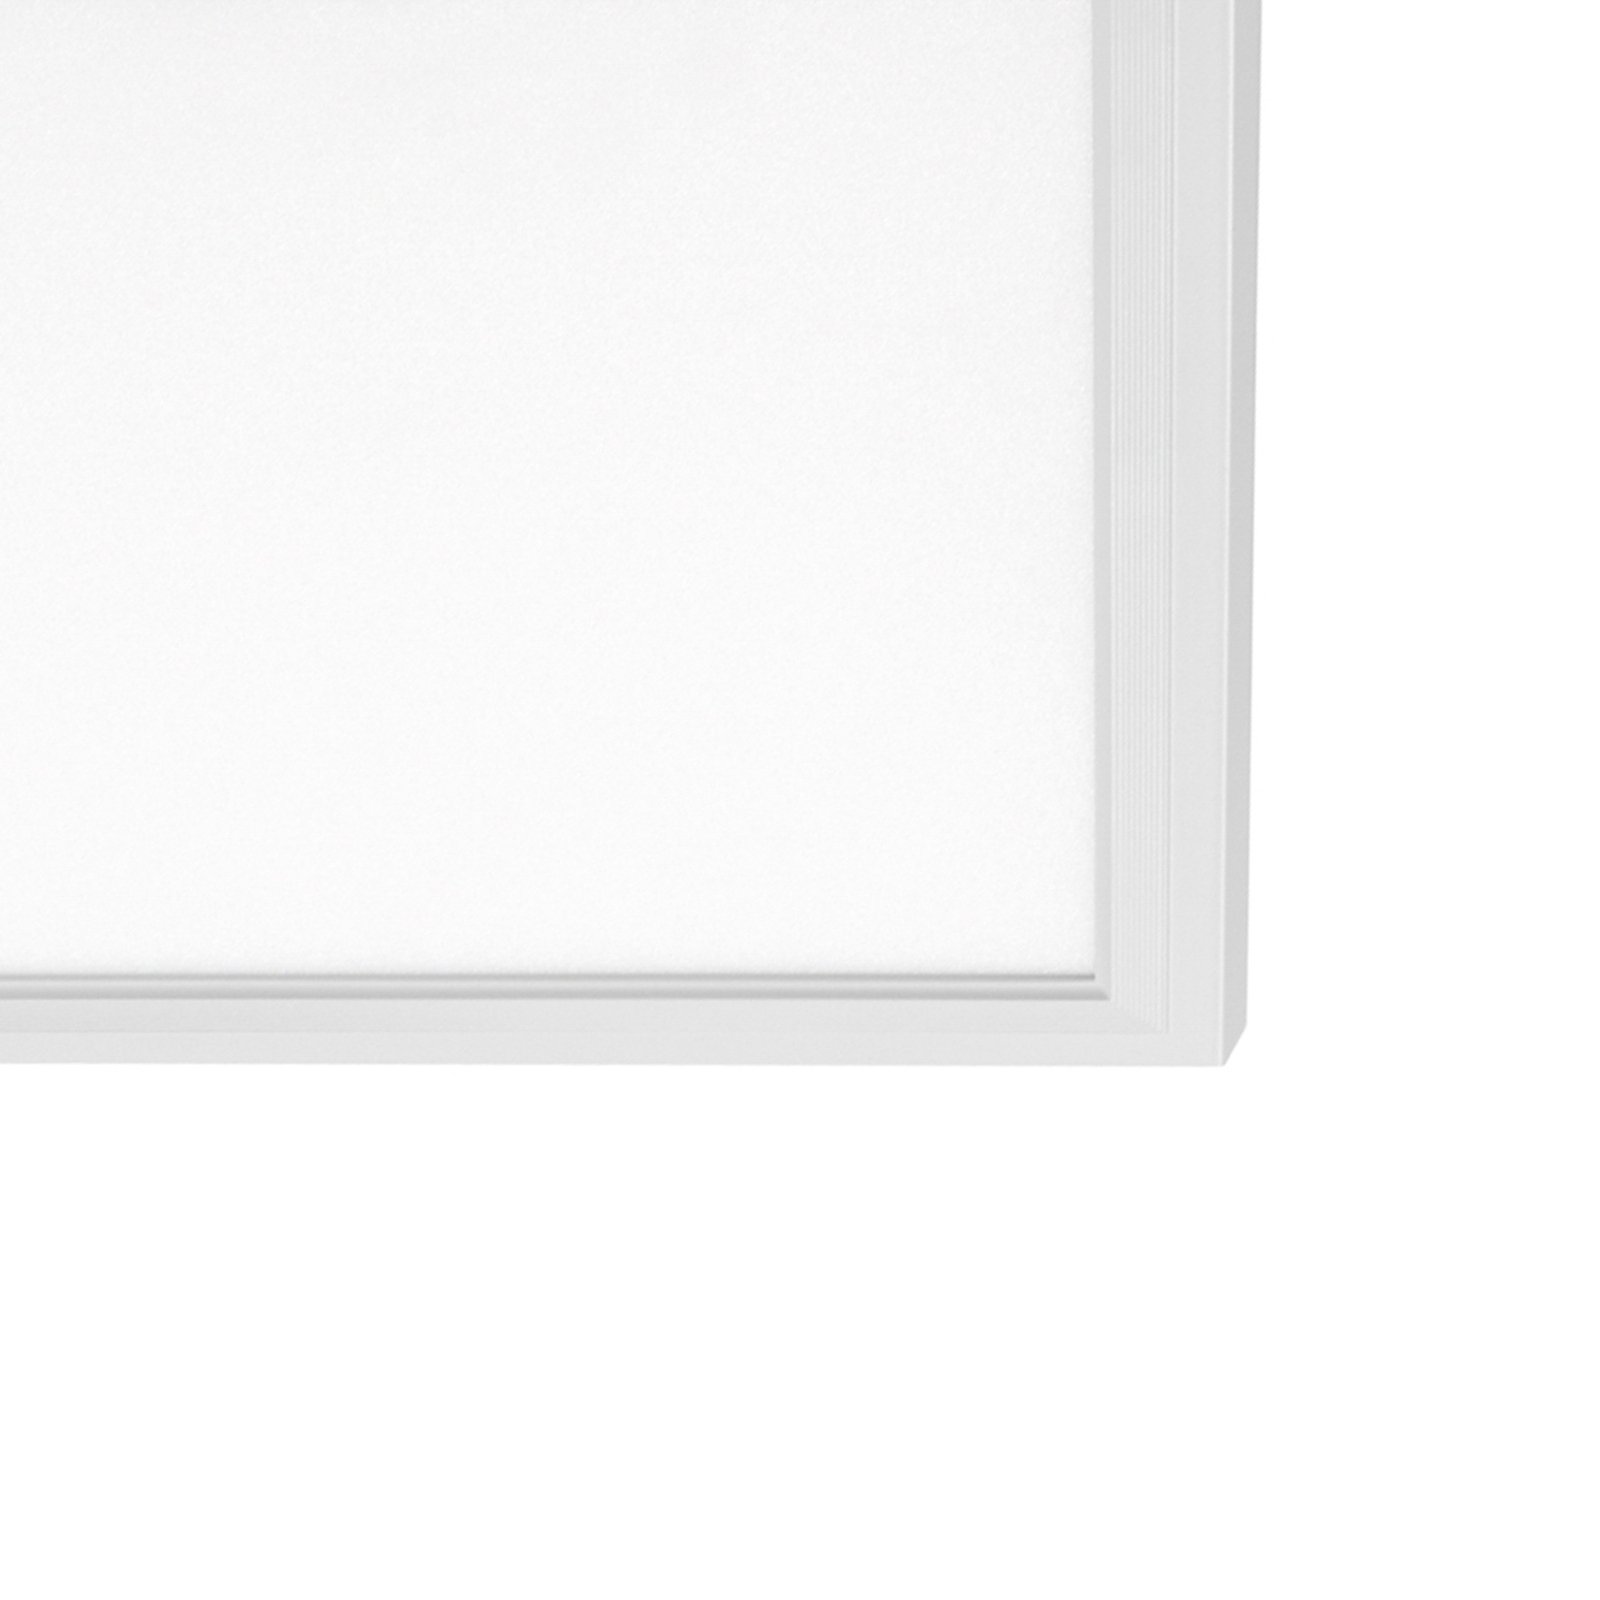 LED paneel Simple, wit, ultravlak, 119,5x29,5cm